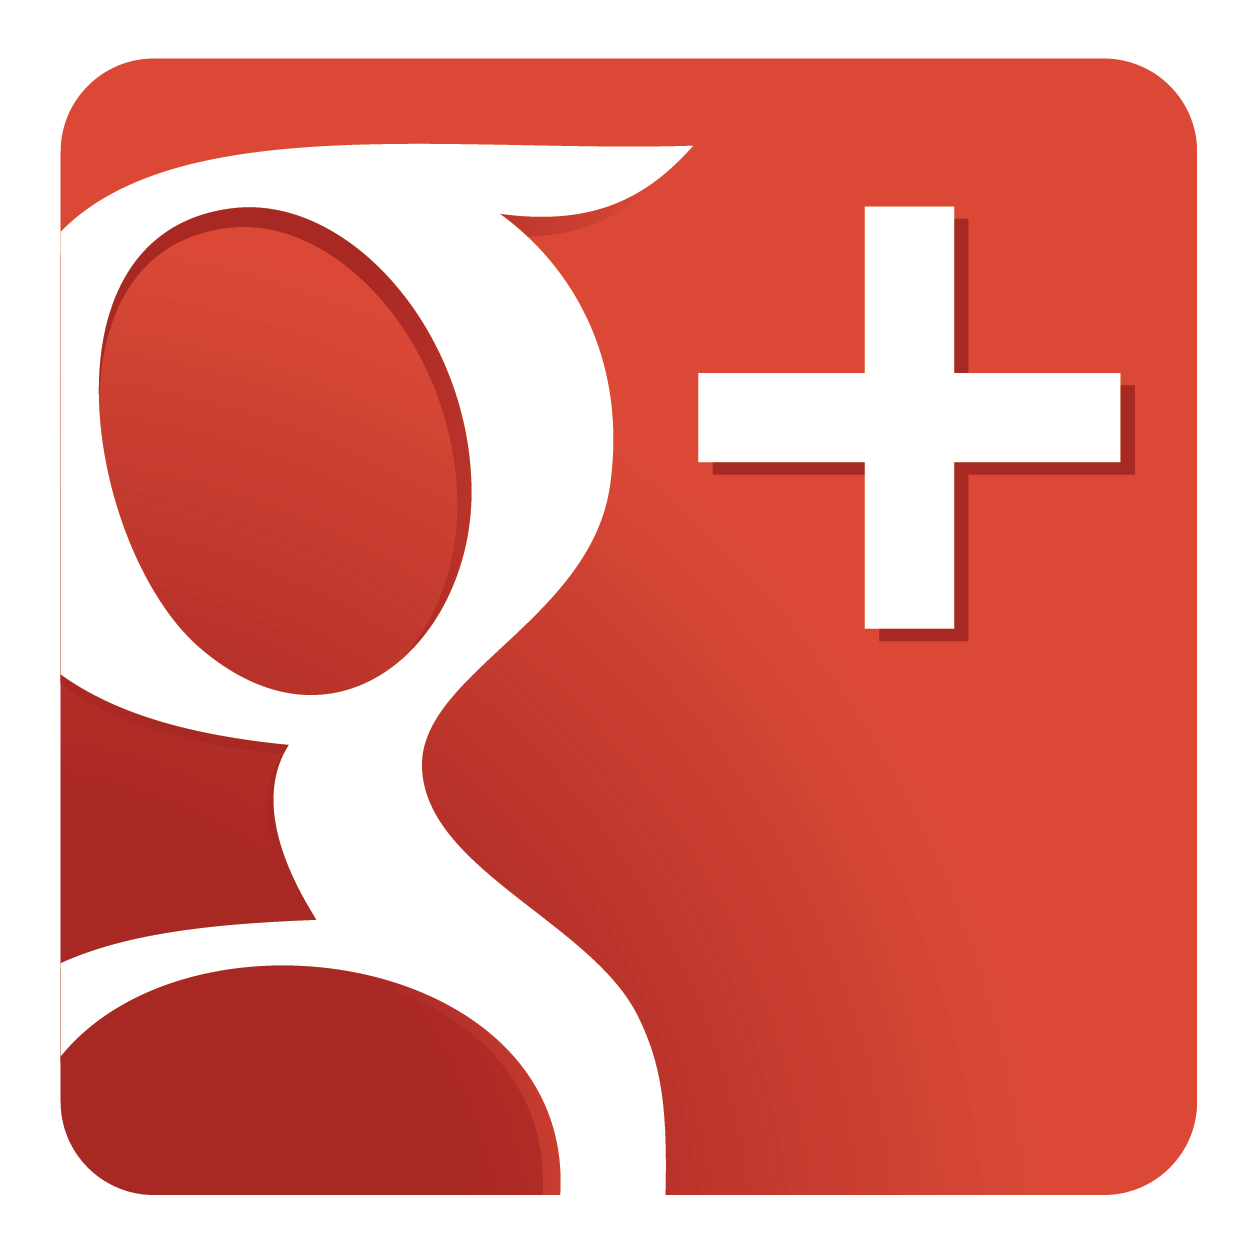 Google Plus Logo Vector